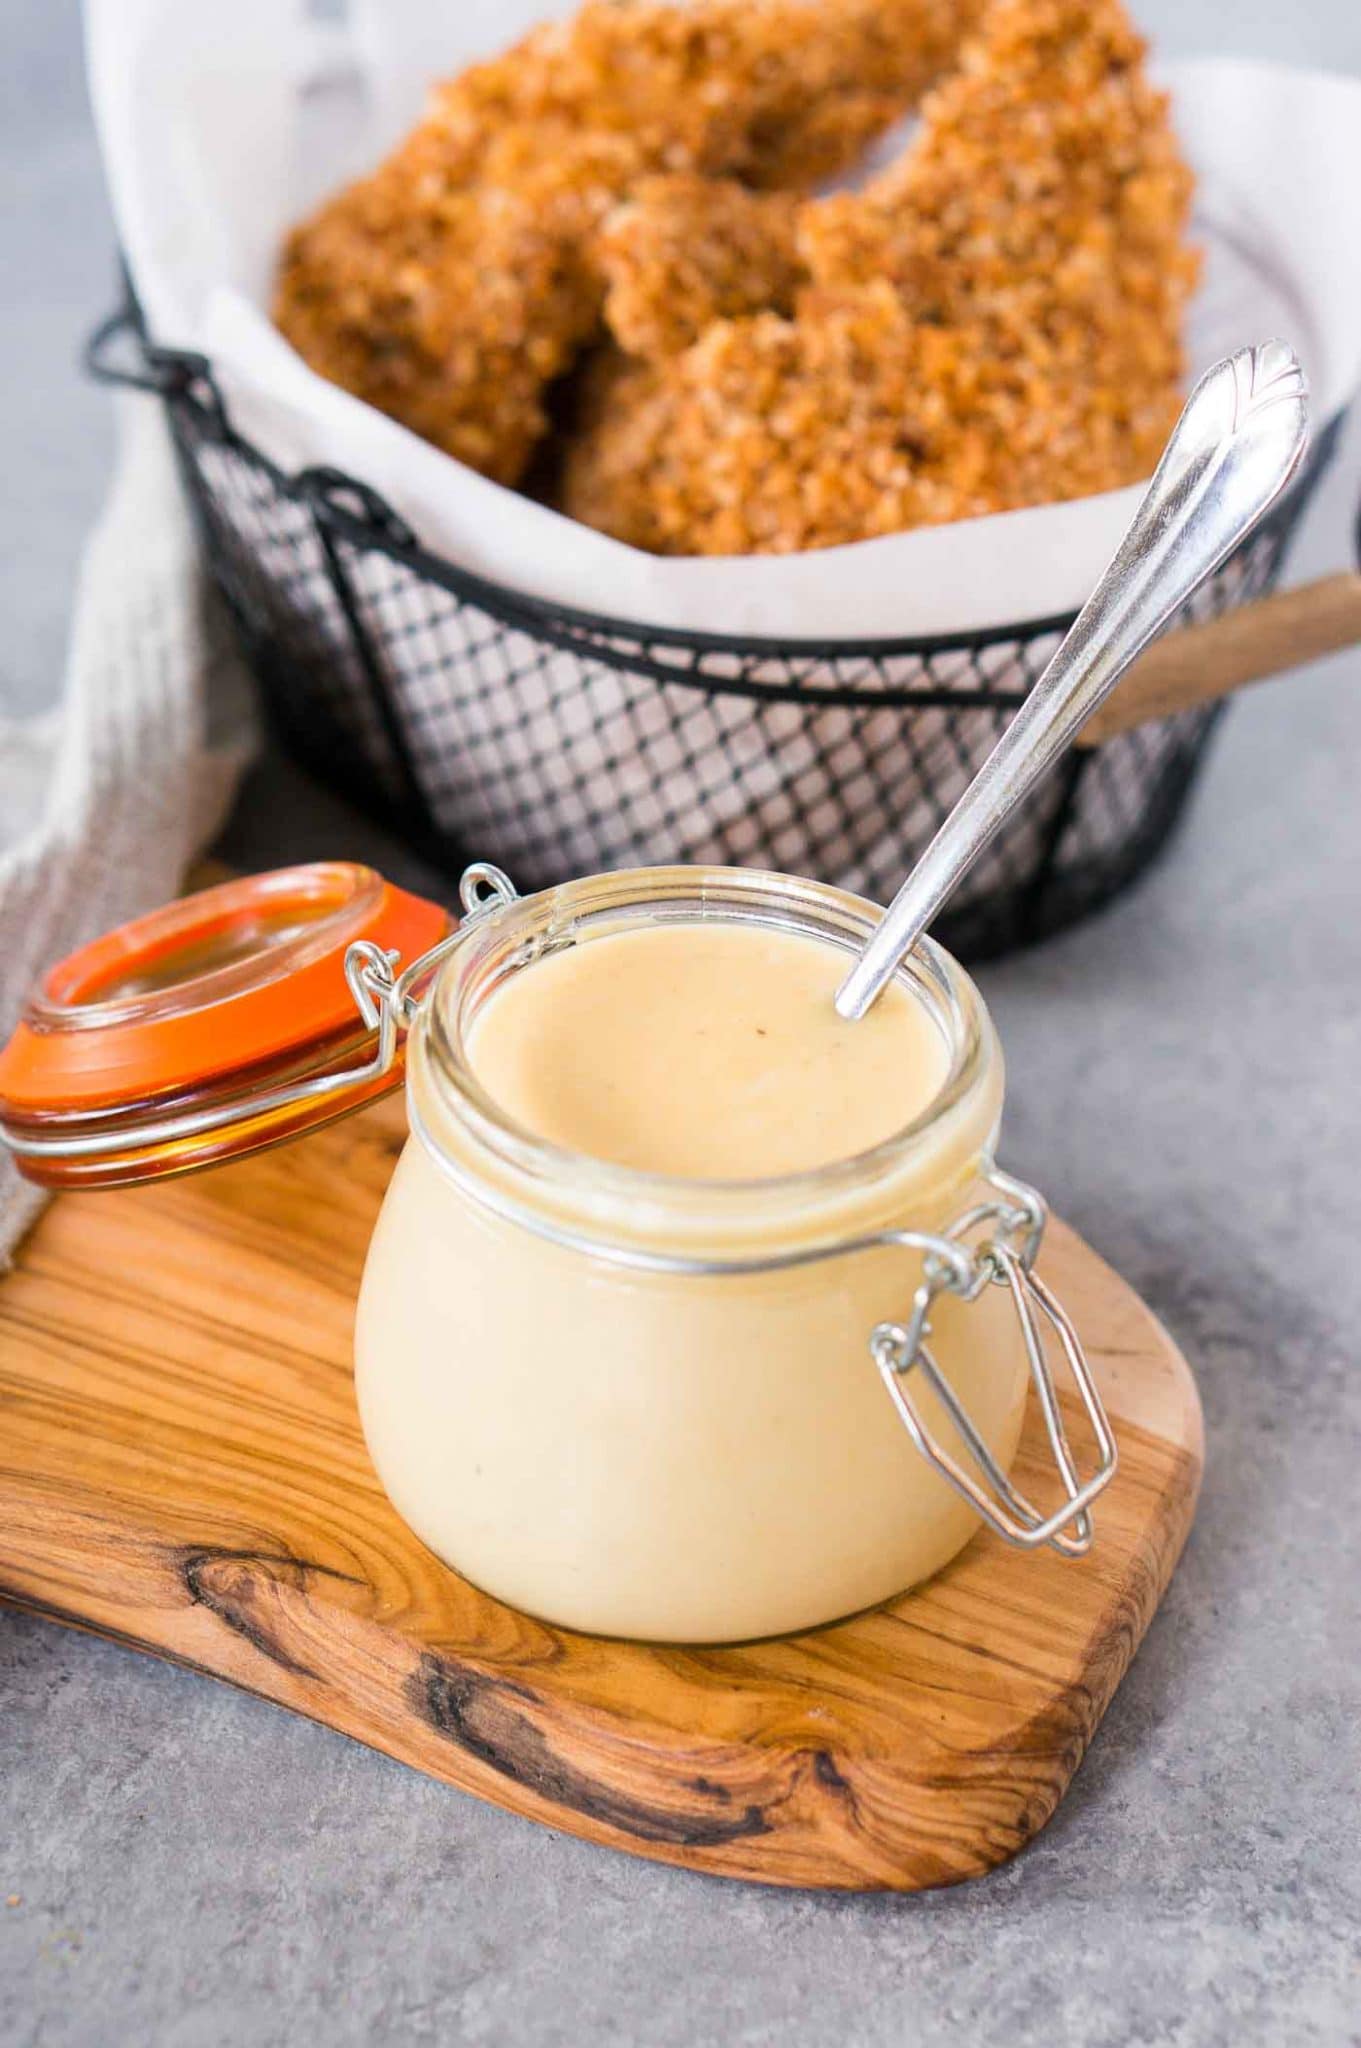 homemade honey mustard recipe served with baked chicken tenders